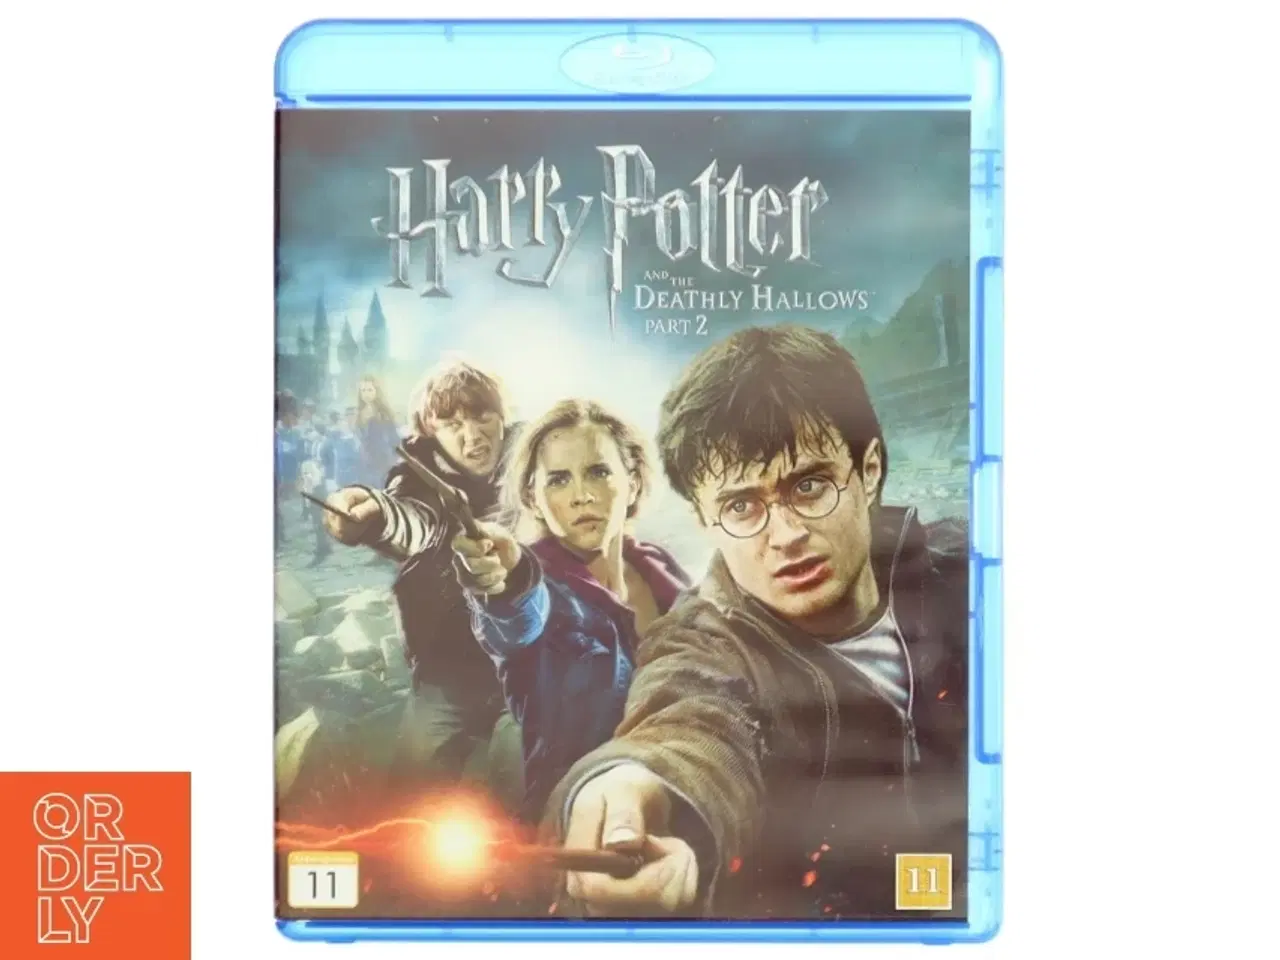 Billede 1 - Harry Potter and the Deathly Hallows Part 2 Blu-ray fra Warner Bros